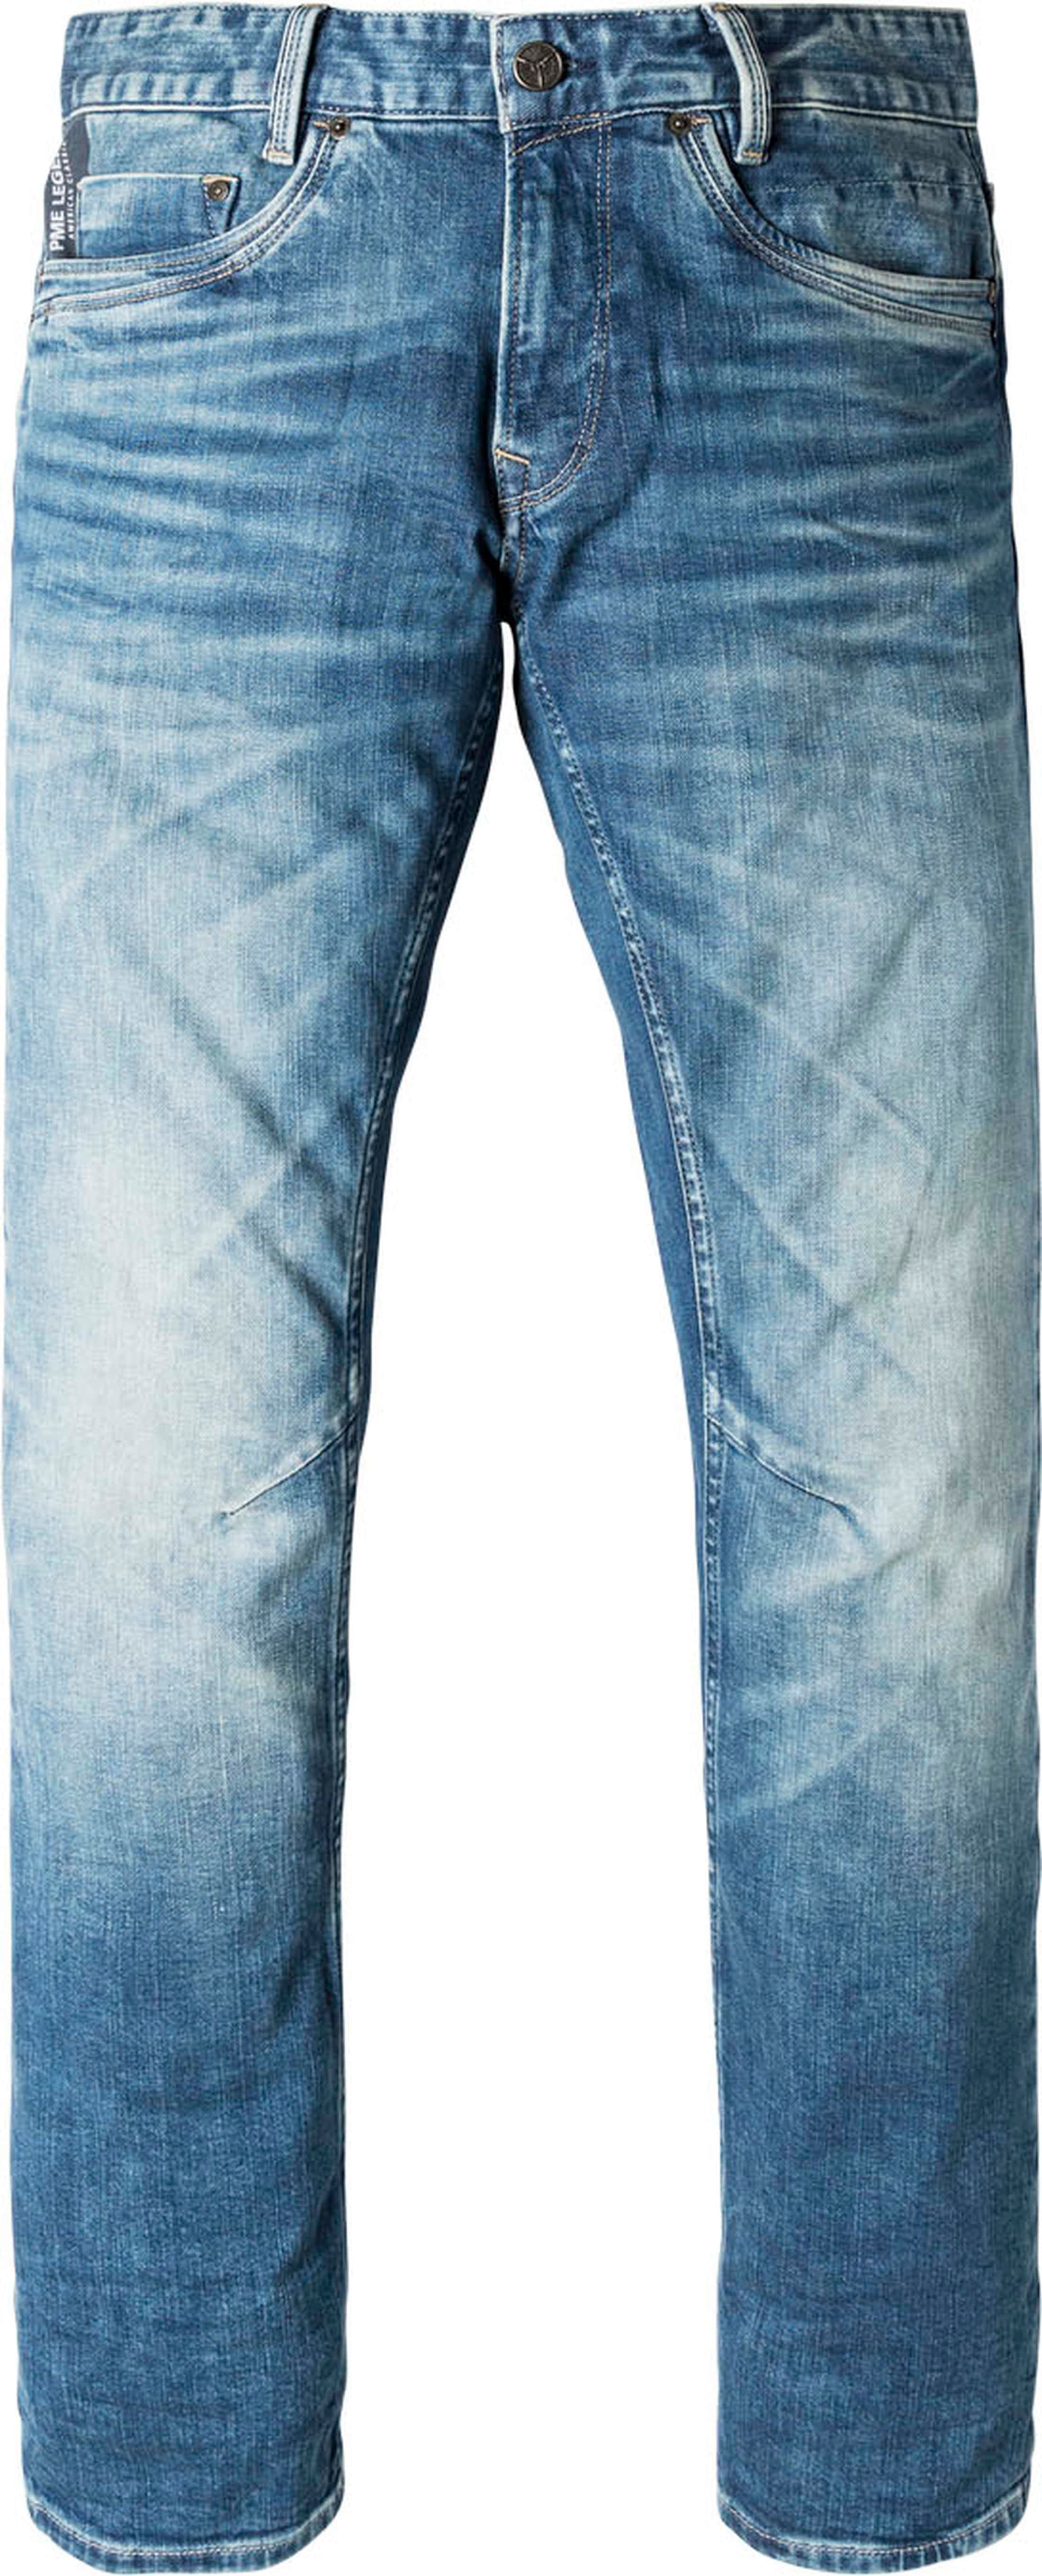 PME Legend Skymaster Jeans Blue size W 28